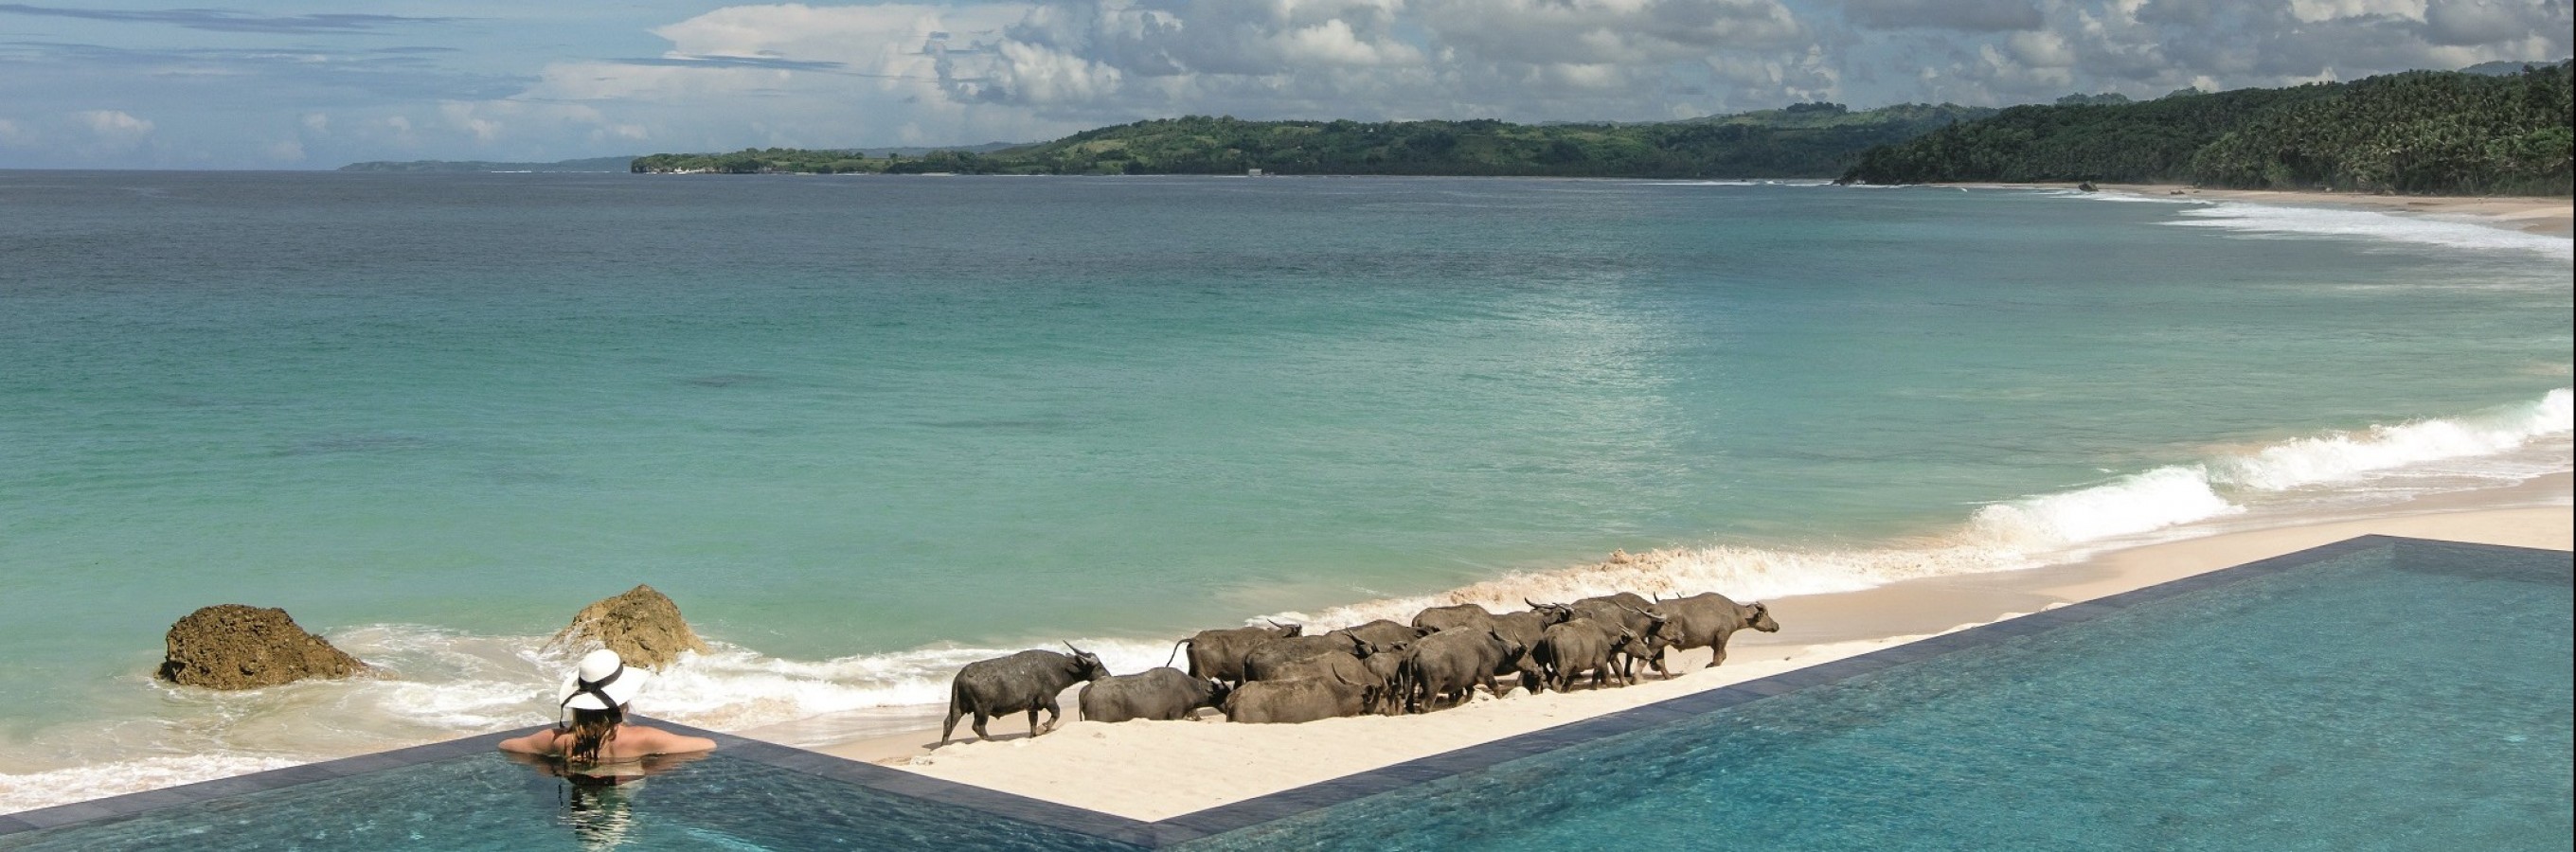 Water buffaloes at Nio Beach Club